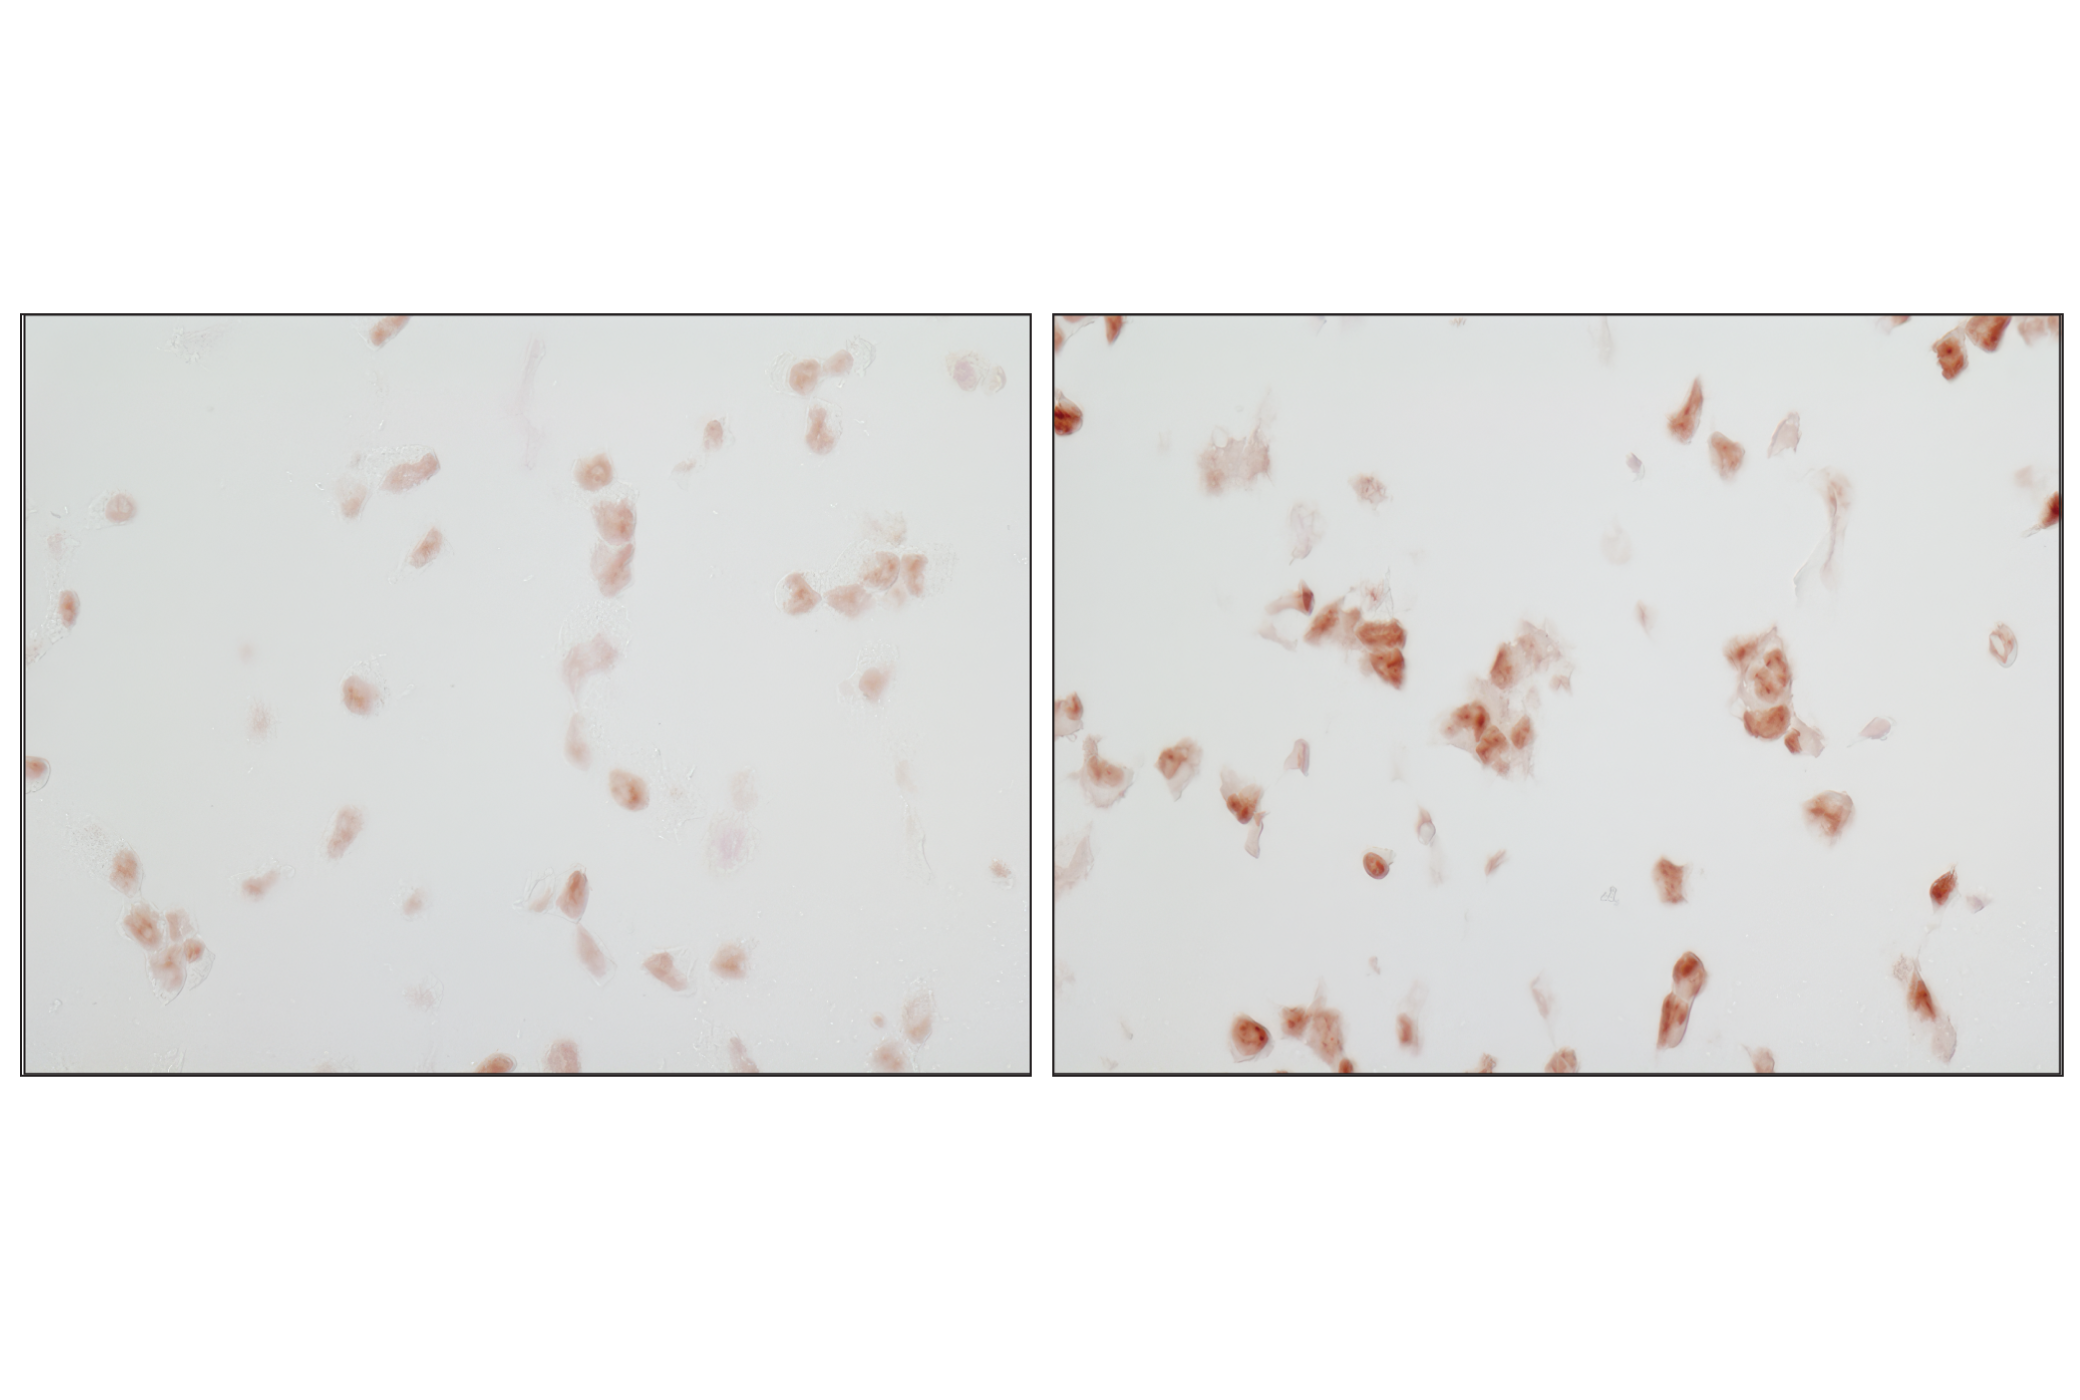  Image 13: Phospho-MAPK Family Antibody Sampler Kit